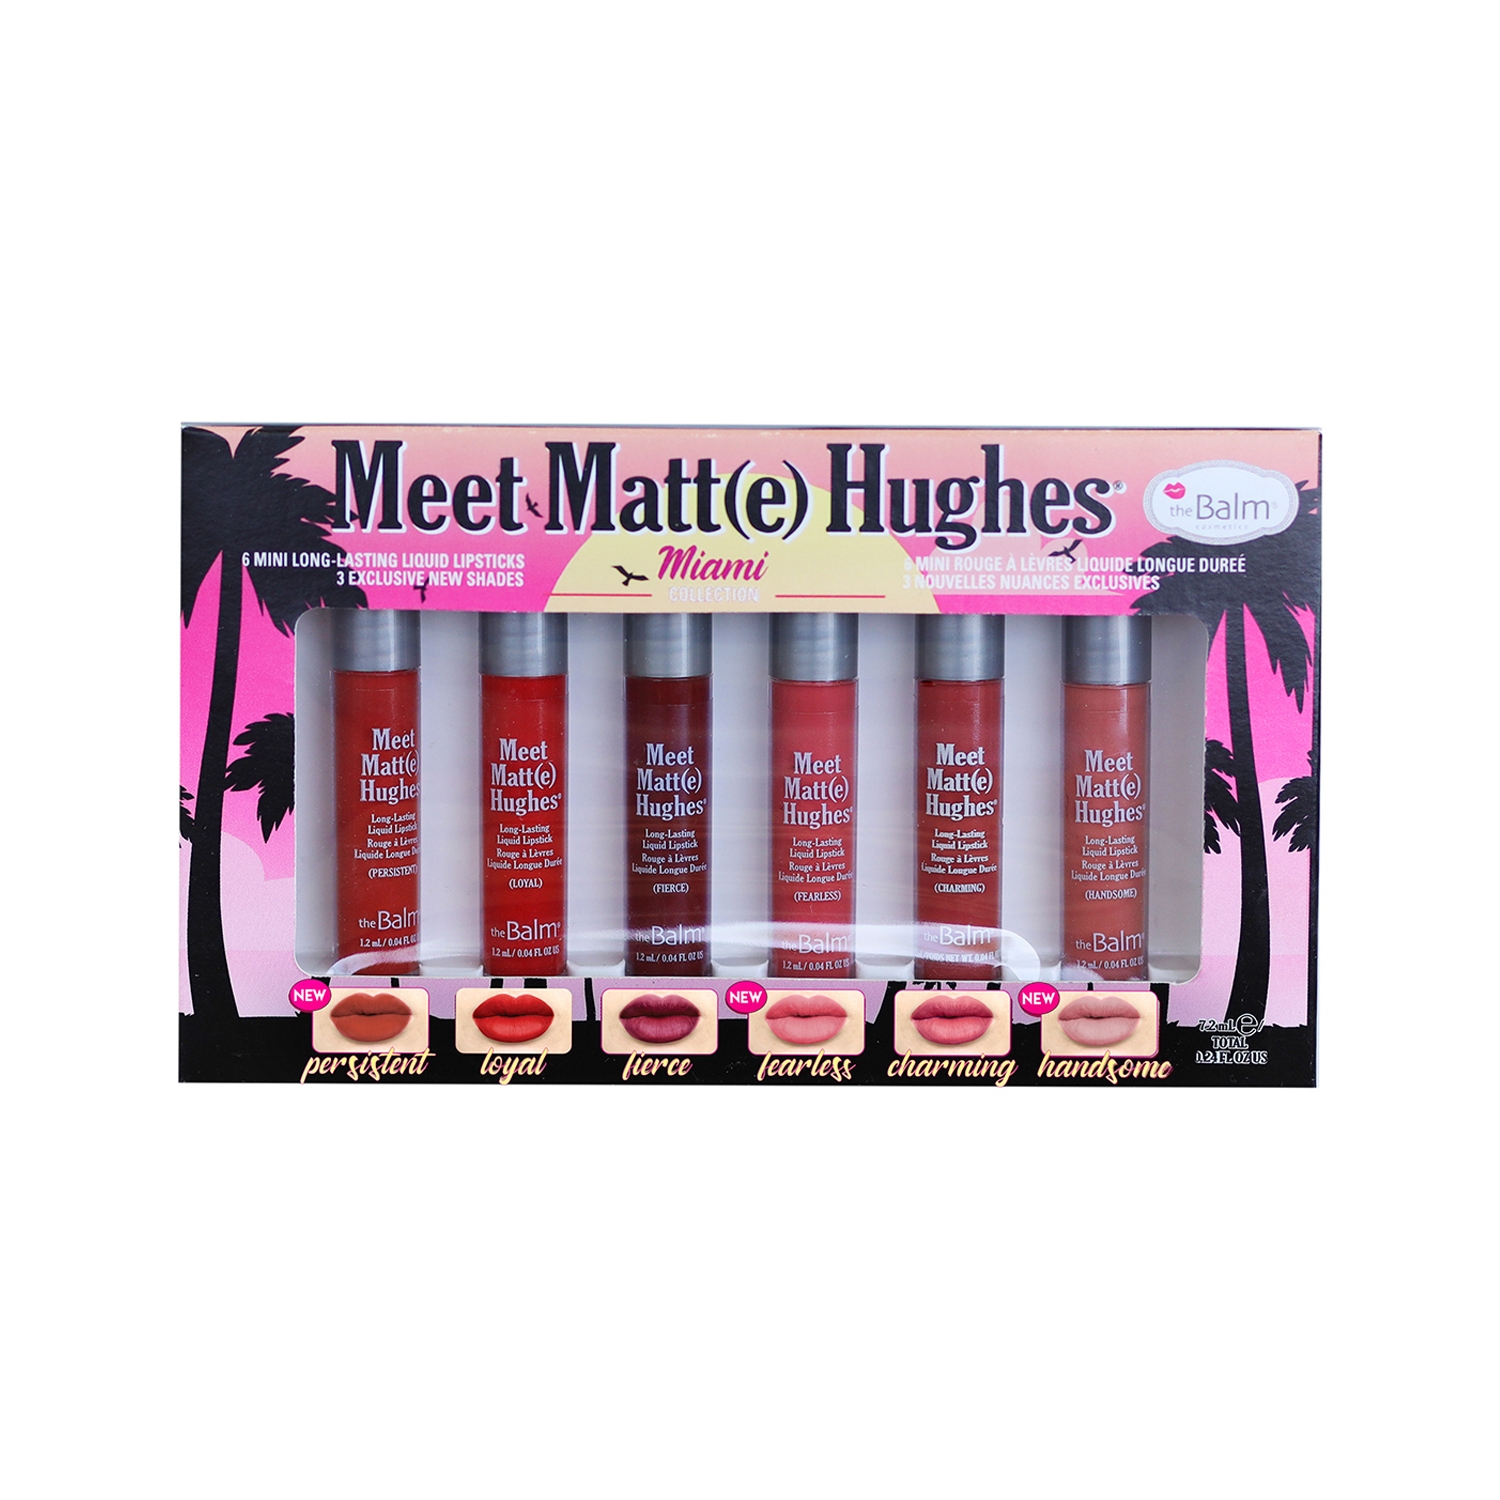 theBalm Cosmetics Meet Matte Hughes Liquid Lipsticks Mini Kit - Miami (6Pcs)